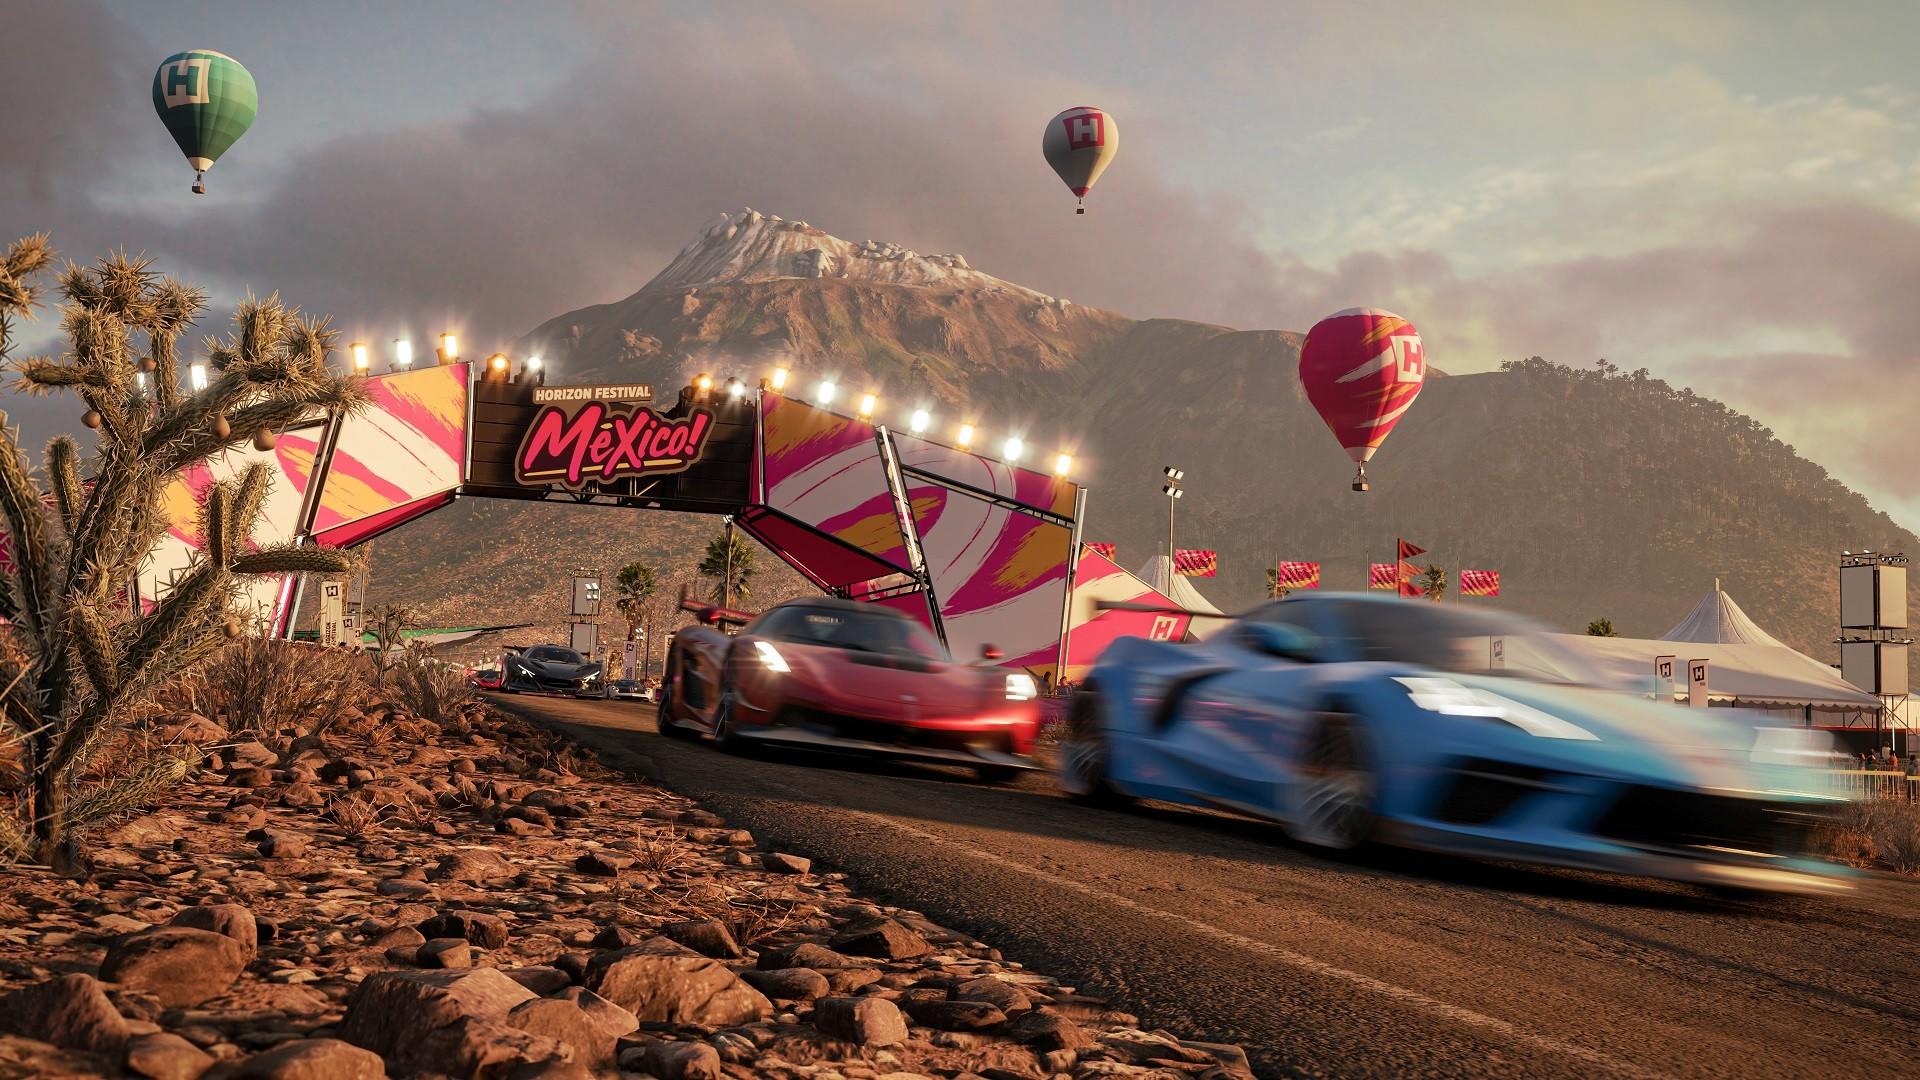 Screenshot of Forza Horizon 5